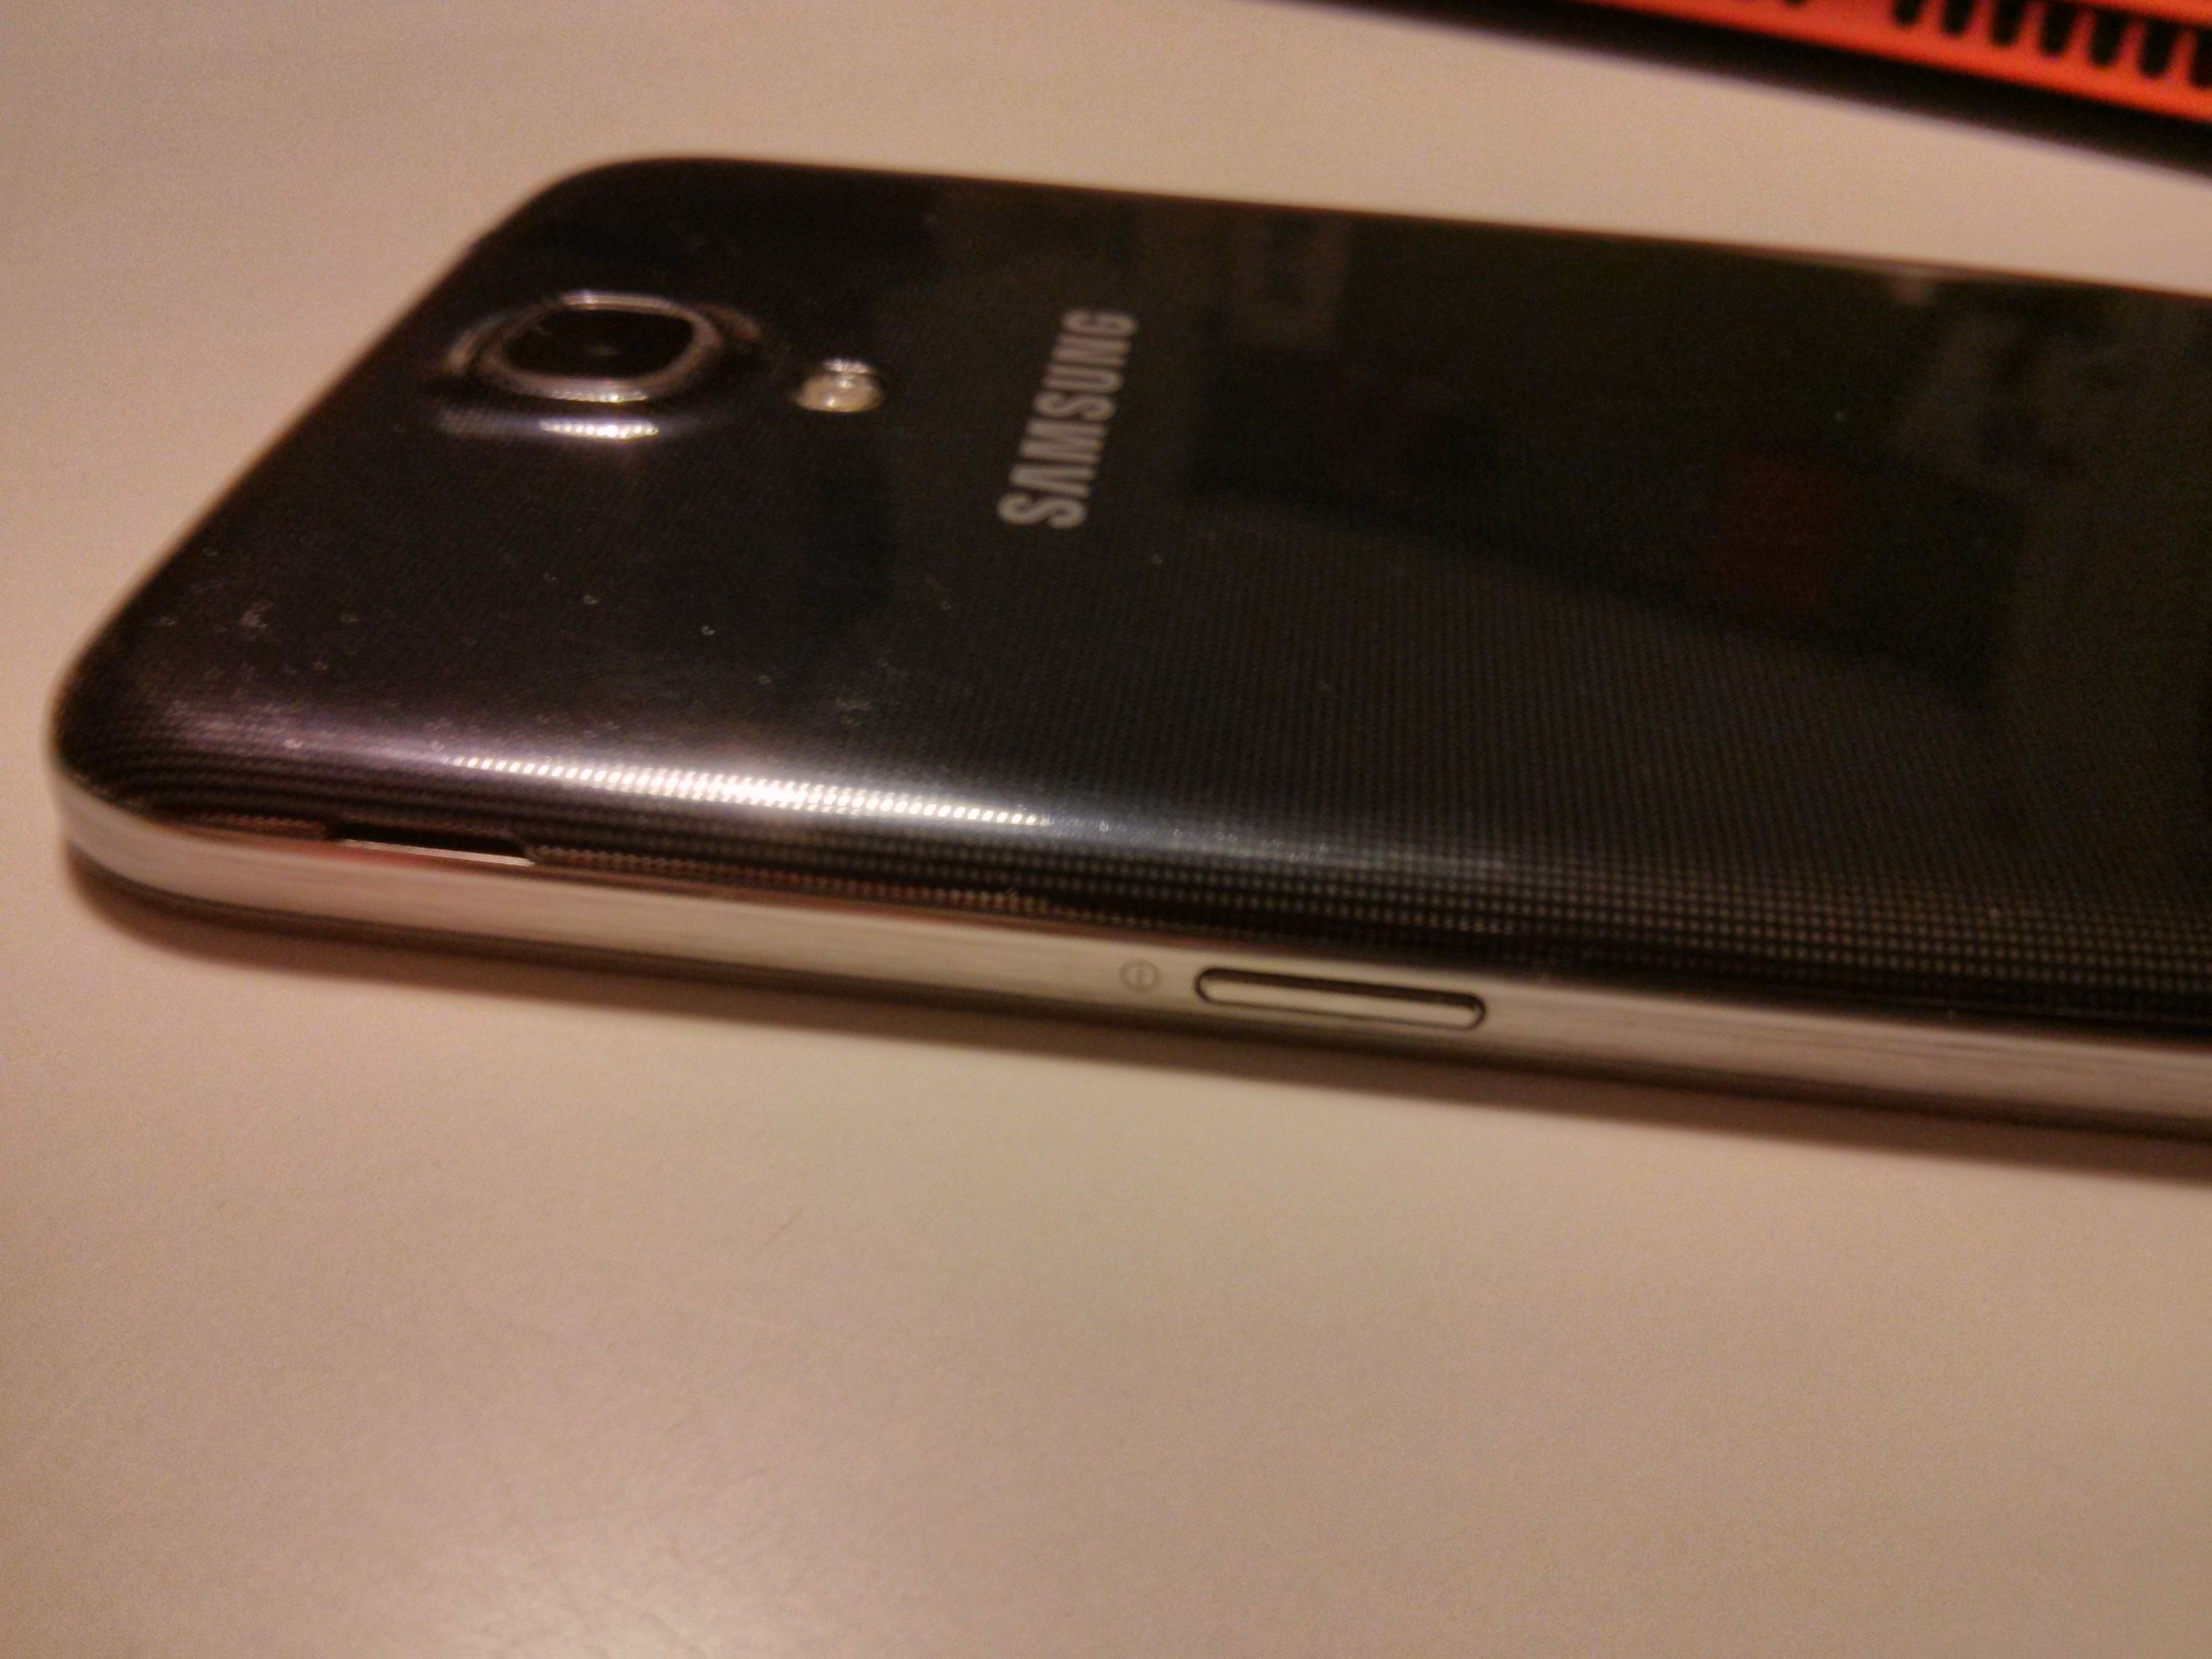 Samsung_Galaxy_Mega_d